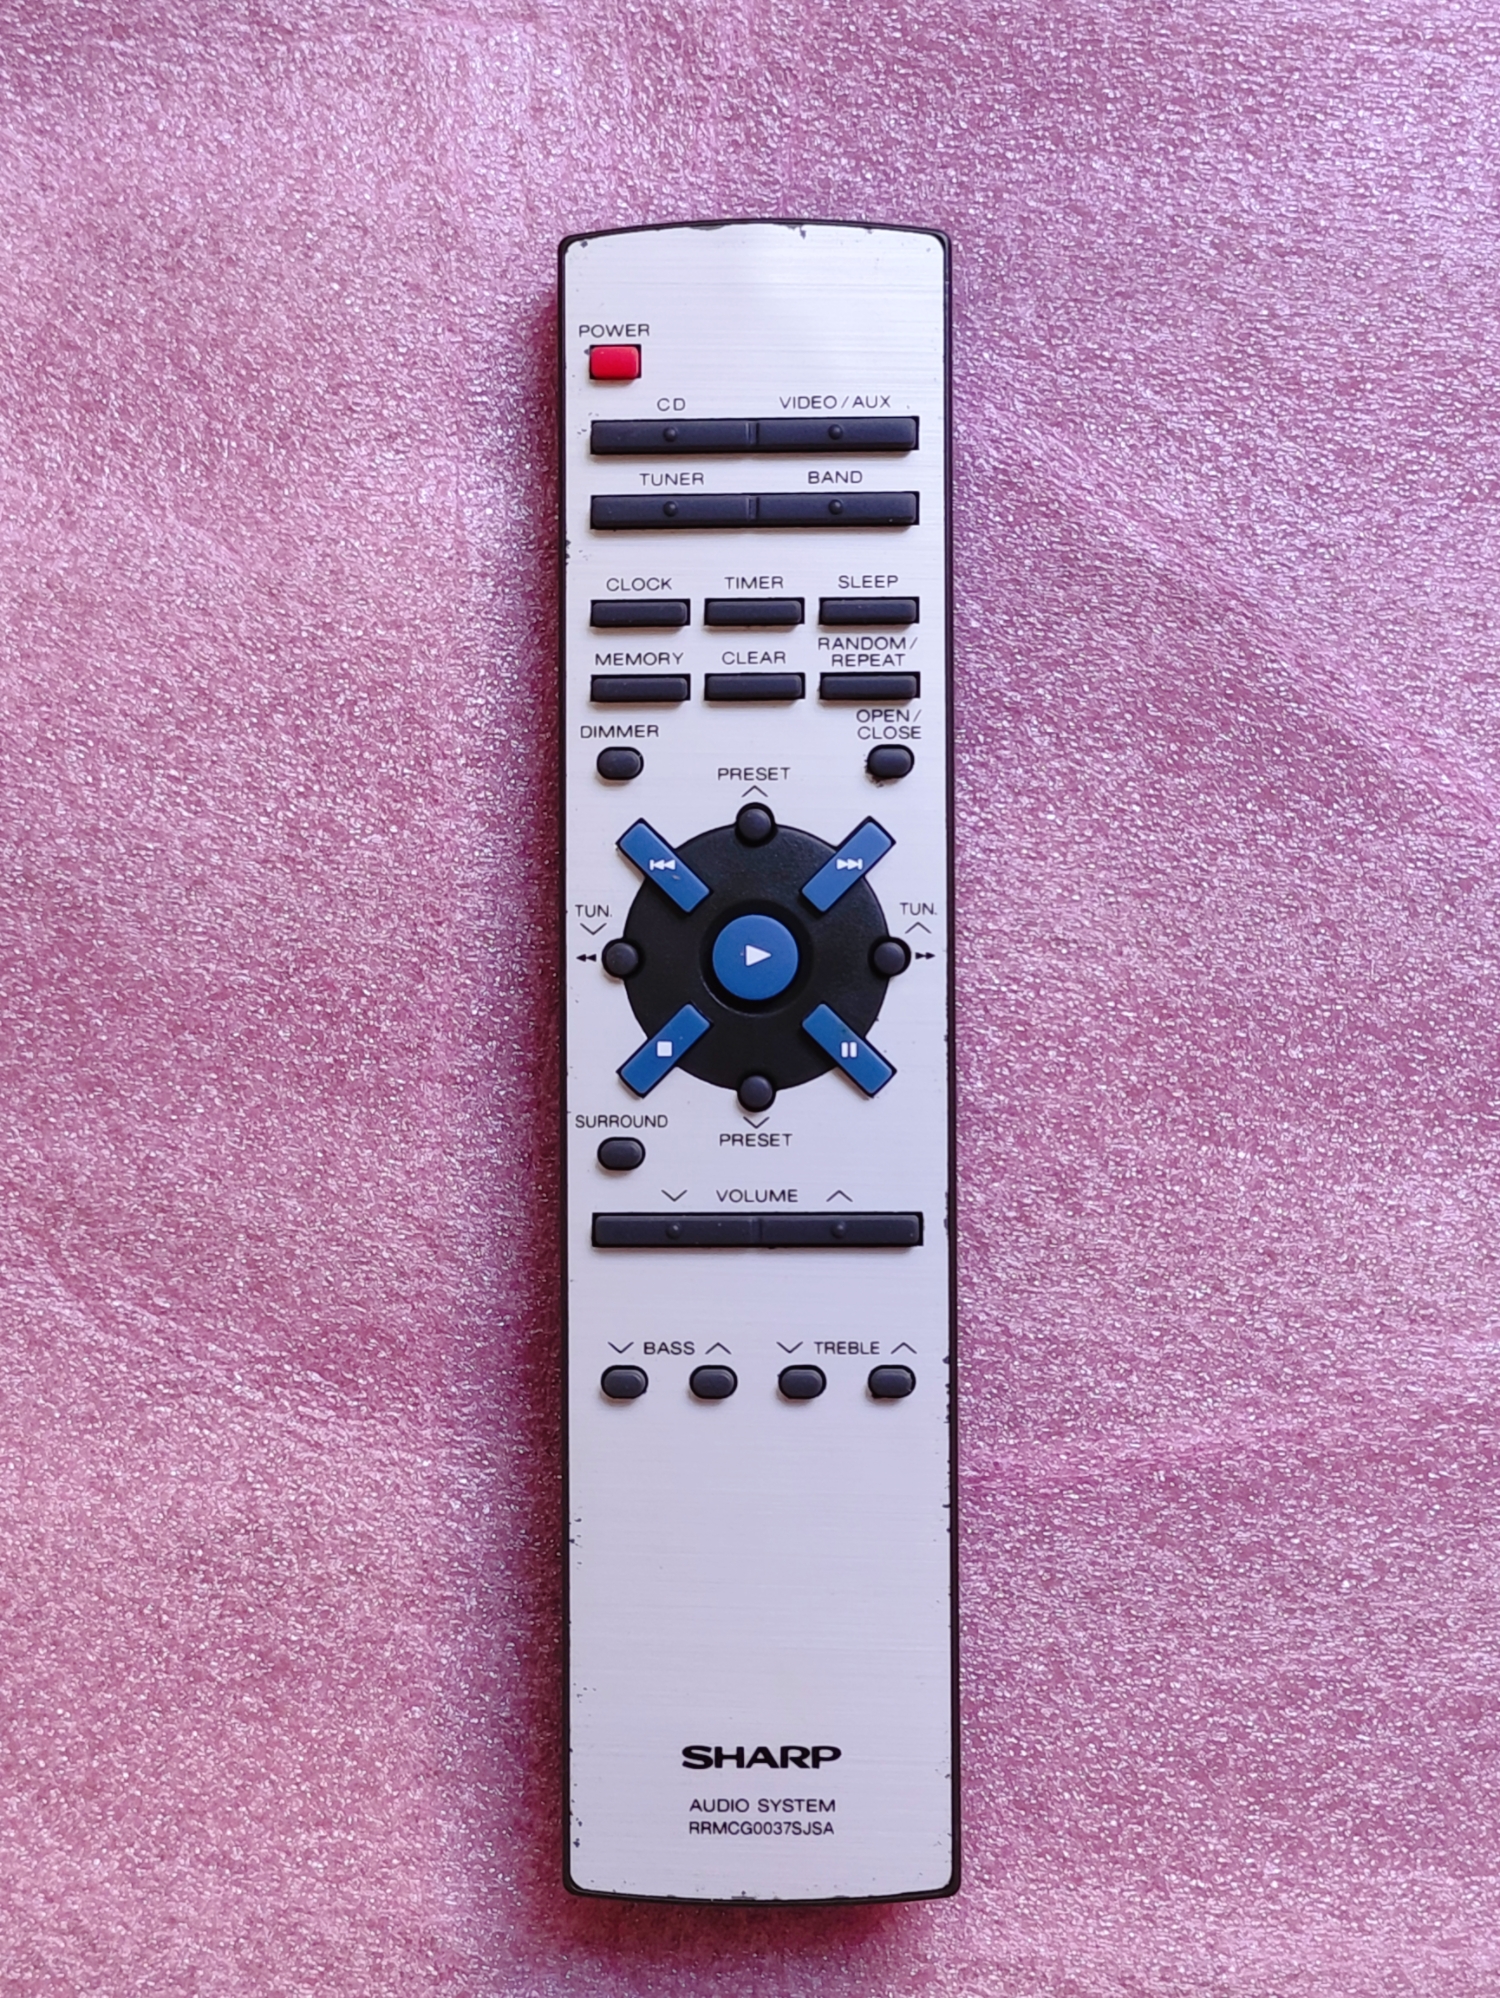 RRMCG0037SJSA Sharp Audio System remote control